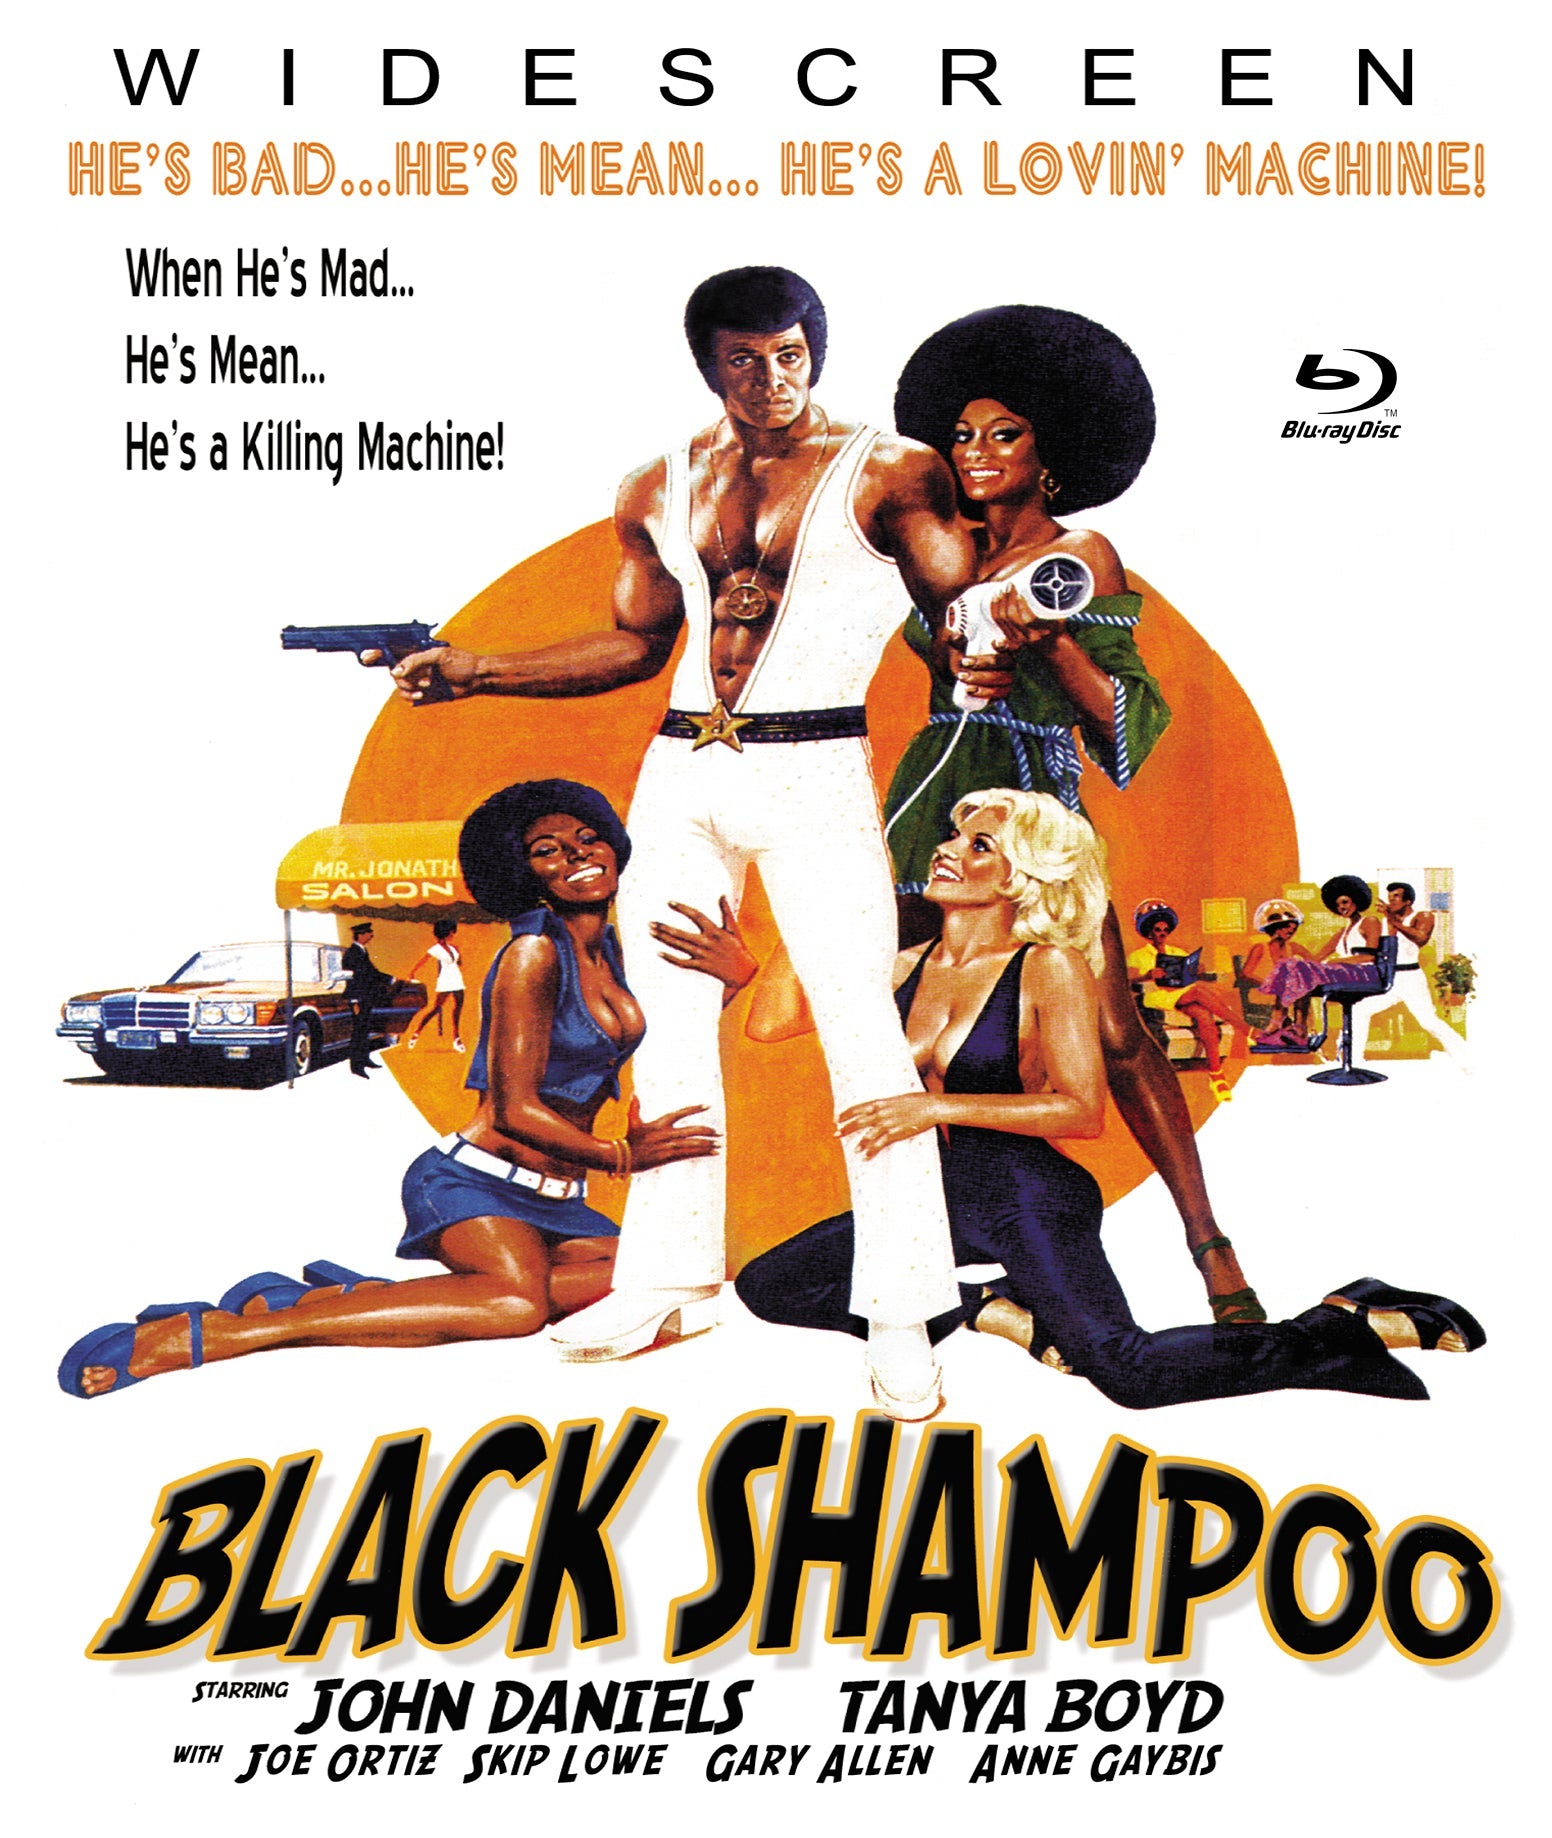 Black Shampoo Blu-Ray/dvd Blu-Ray